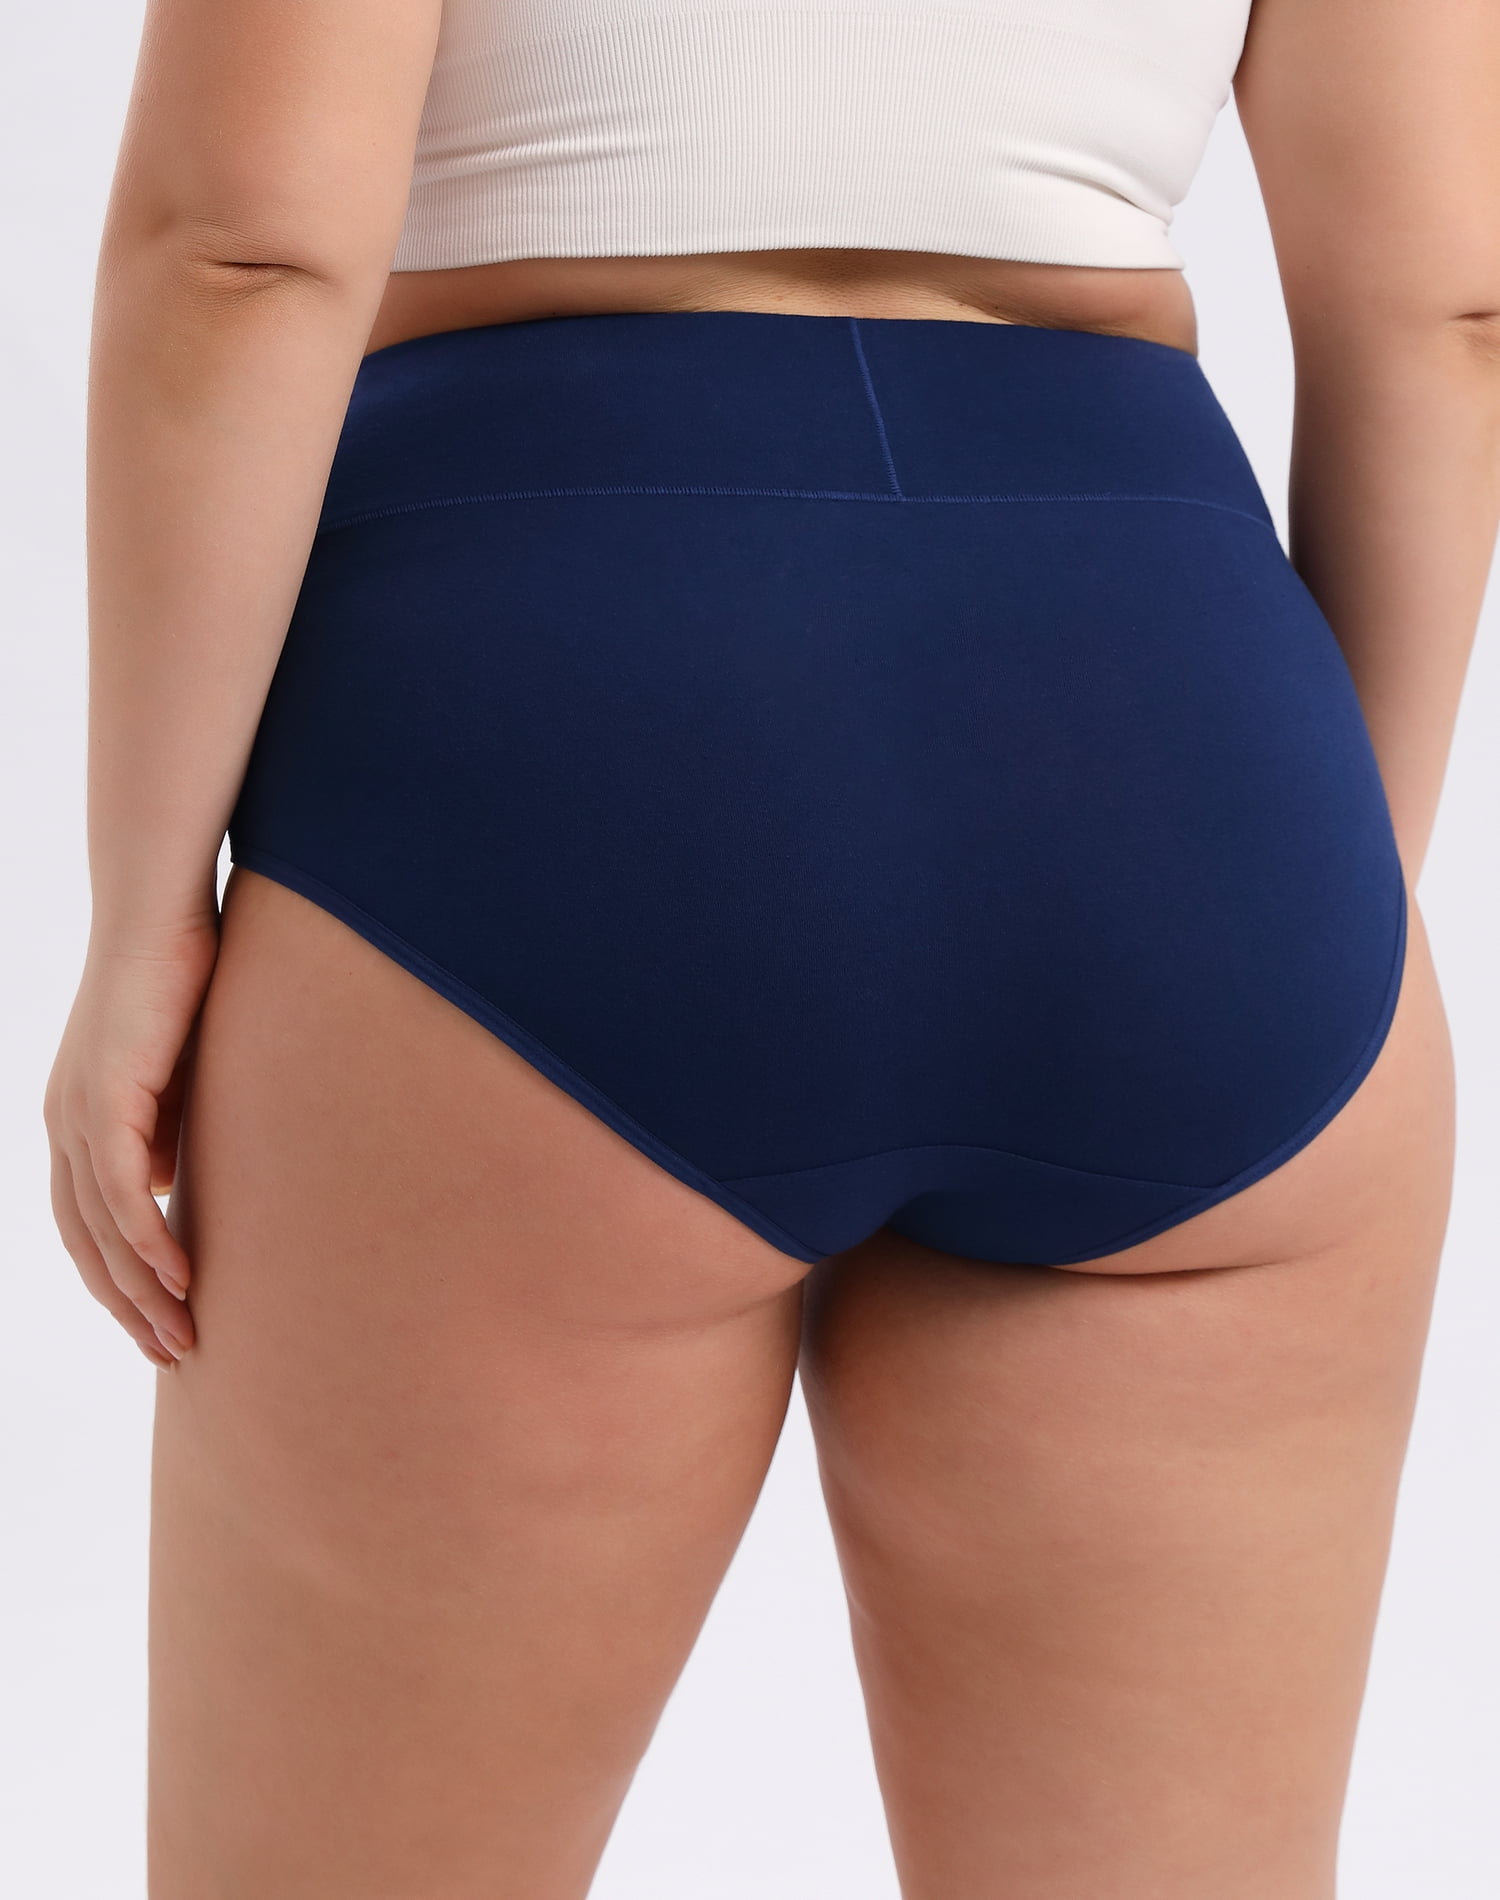 INNERSY Women's Plus Size XL-5XL Cotton Underwear High Waisted Briefs  Panties 4-Pack (2XL,Beige) 